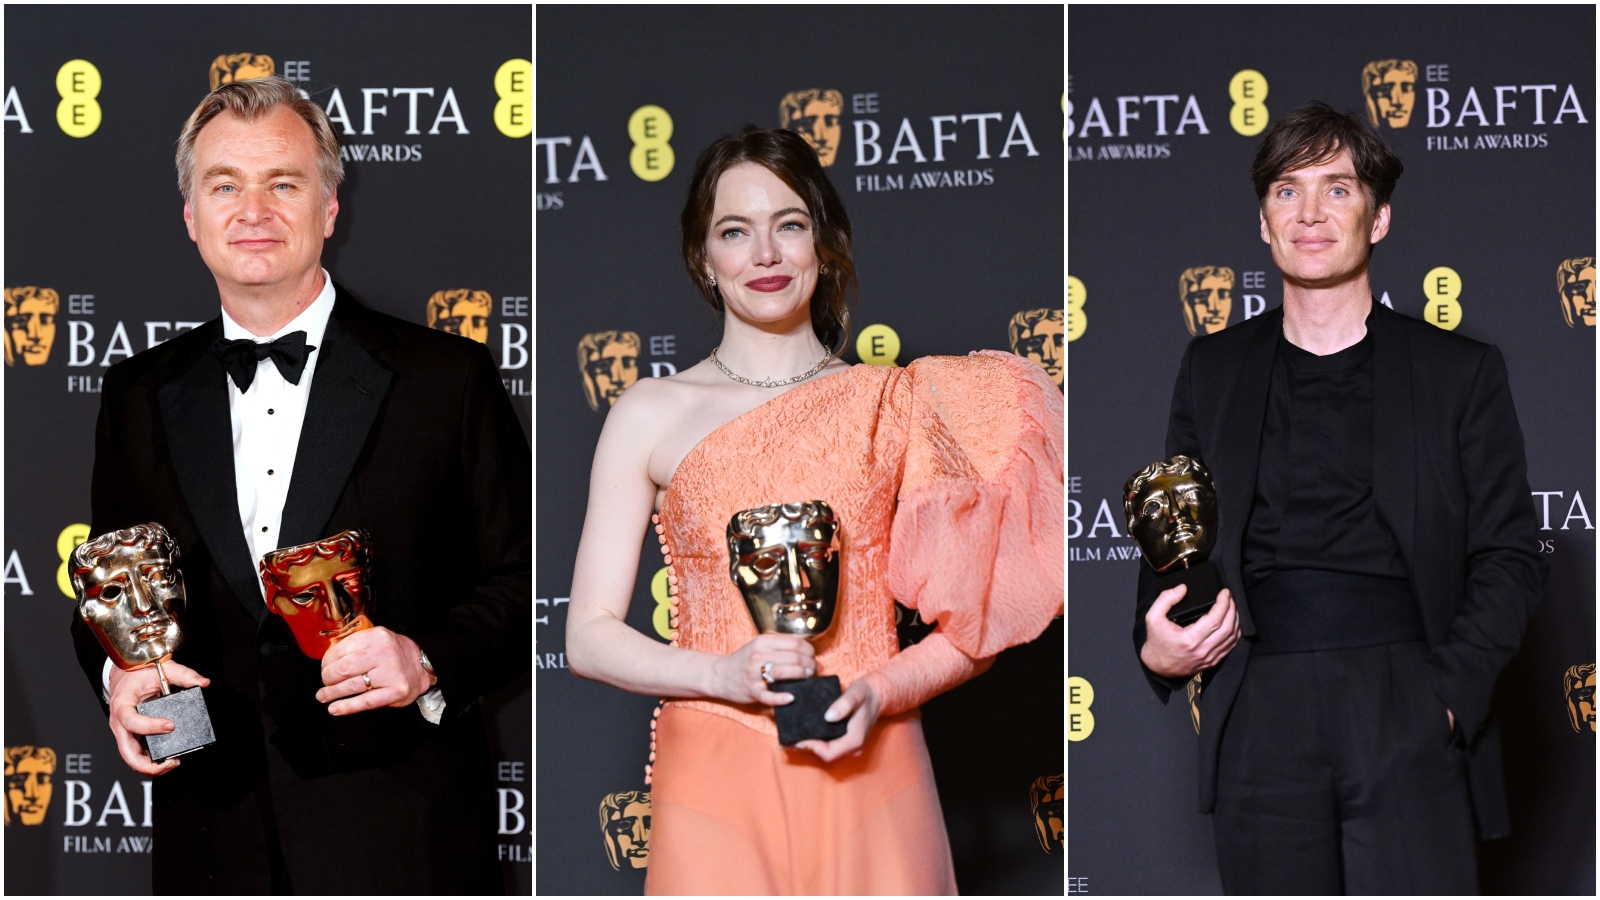 Održane BAFTA filmske nagrade: Oppenheimer ne prestaje dominirati, a Scorsese ne prestaje gubiti